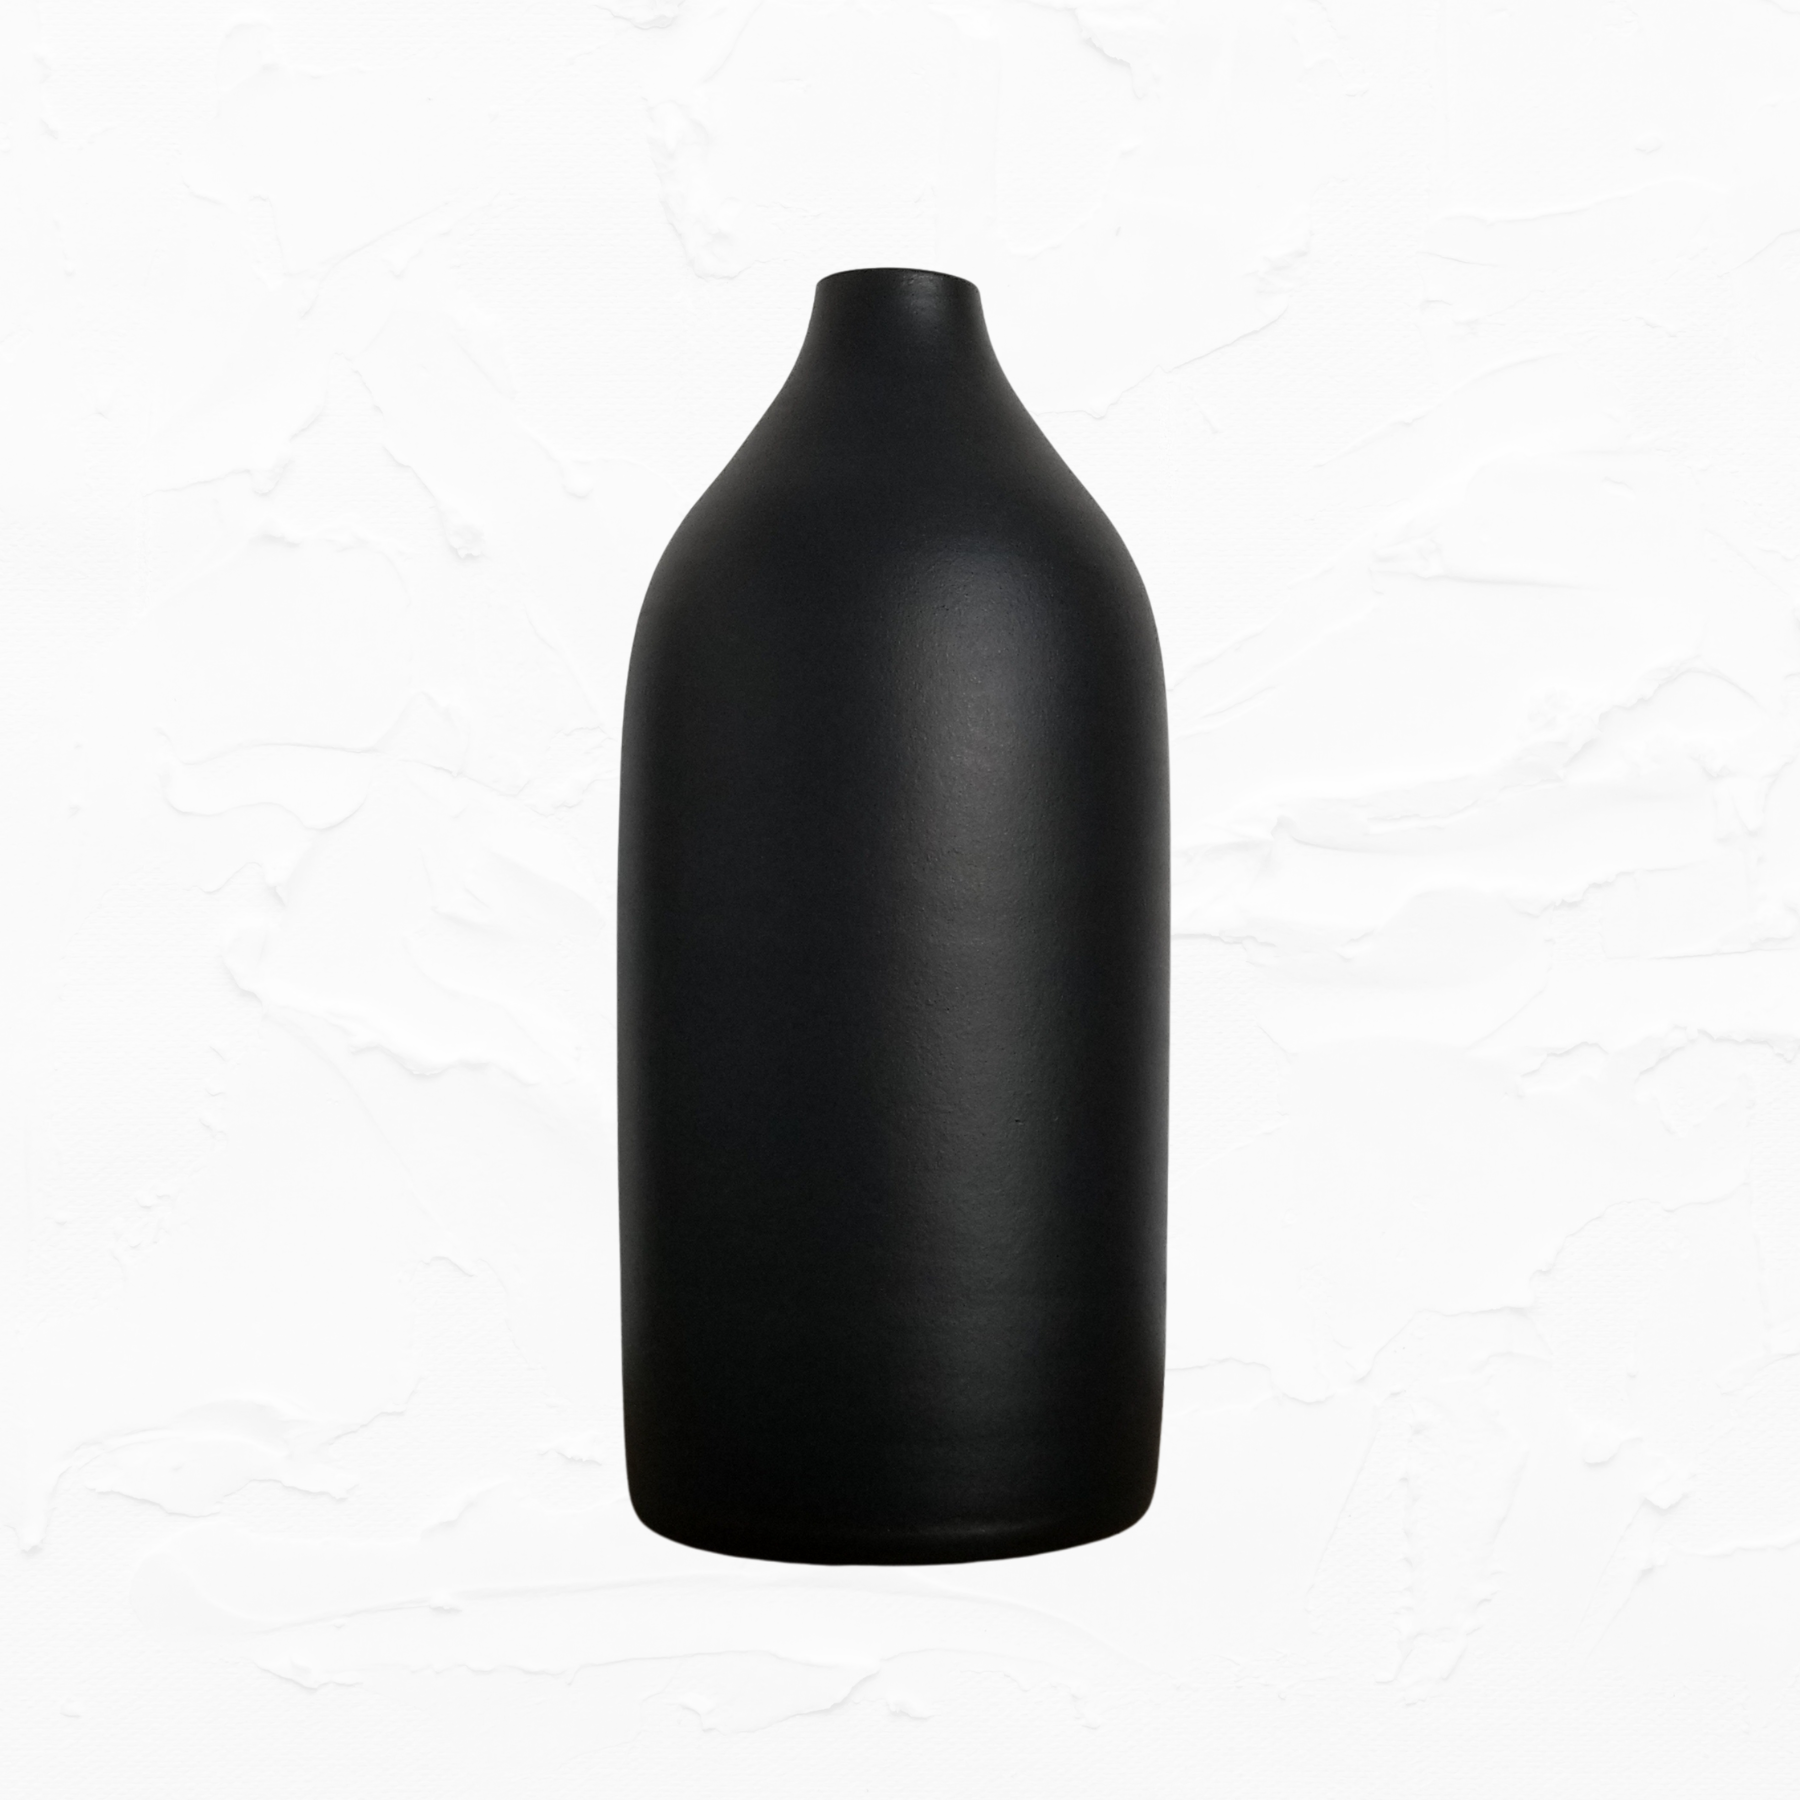 Black Earthenware Vase